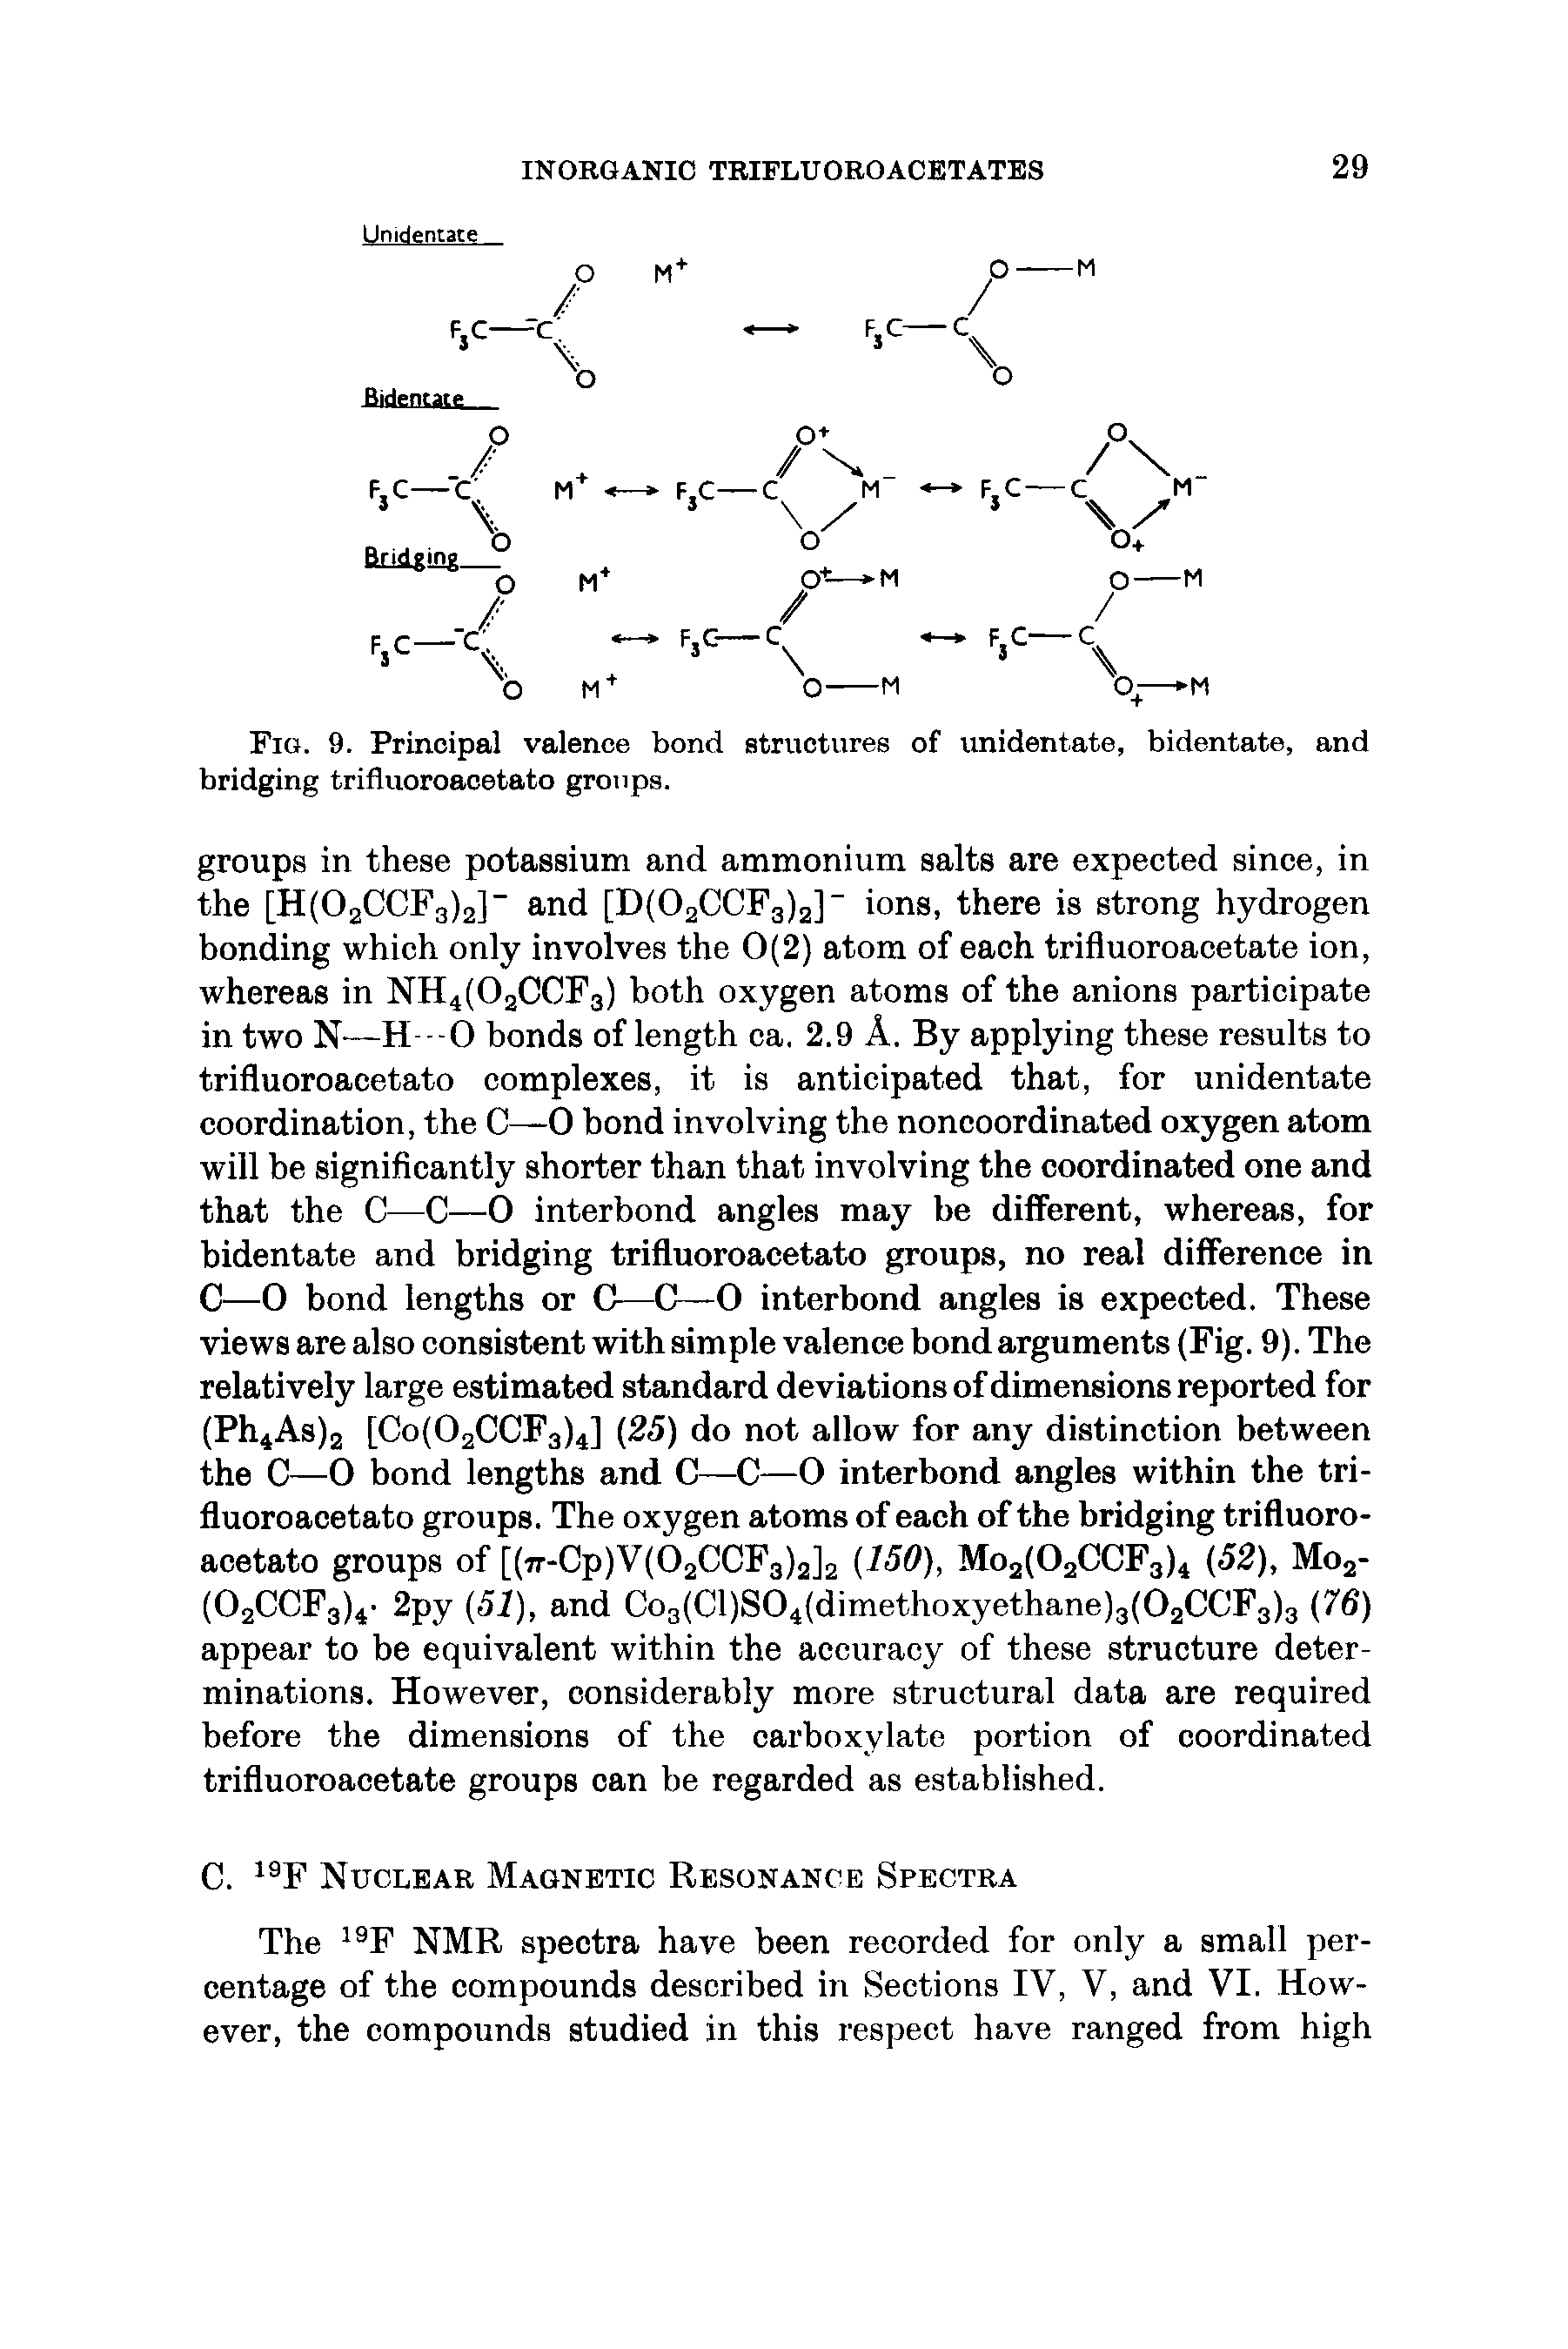 Fig. 9. Principal valence bond structures of unidentate, bidentate, and bridging trifluoroacetato groups.